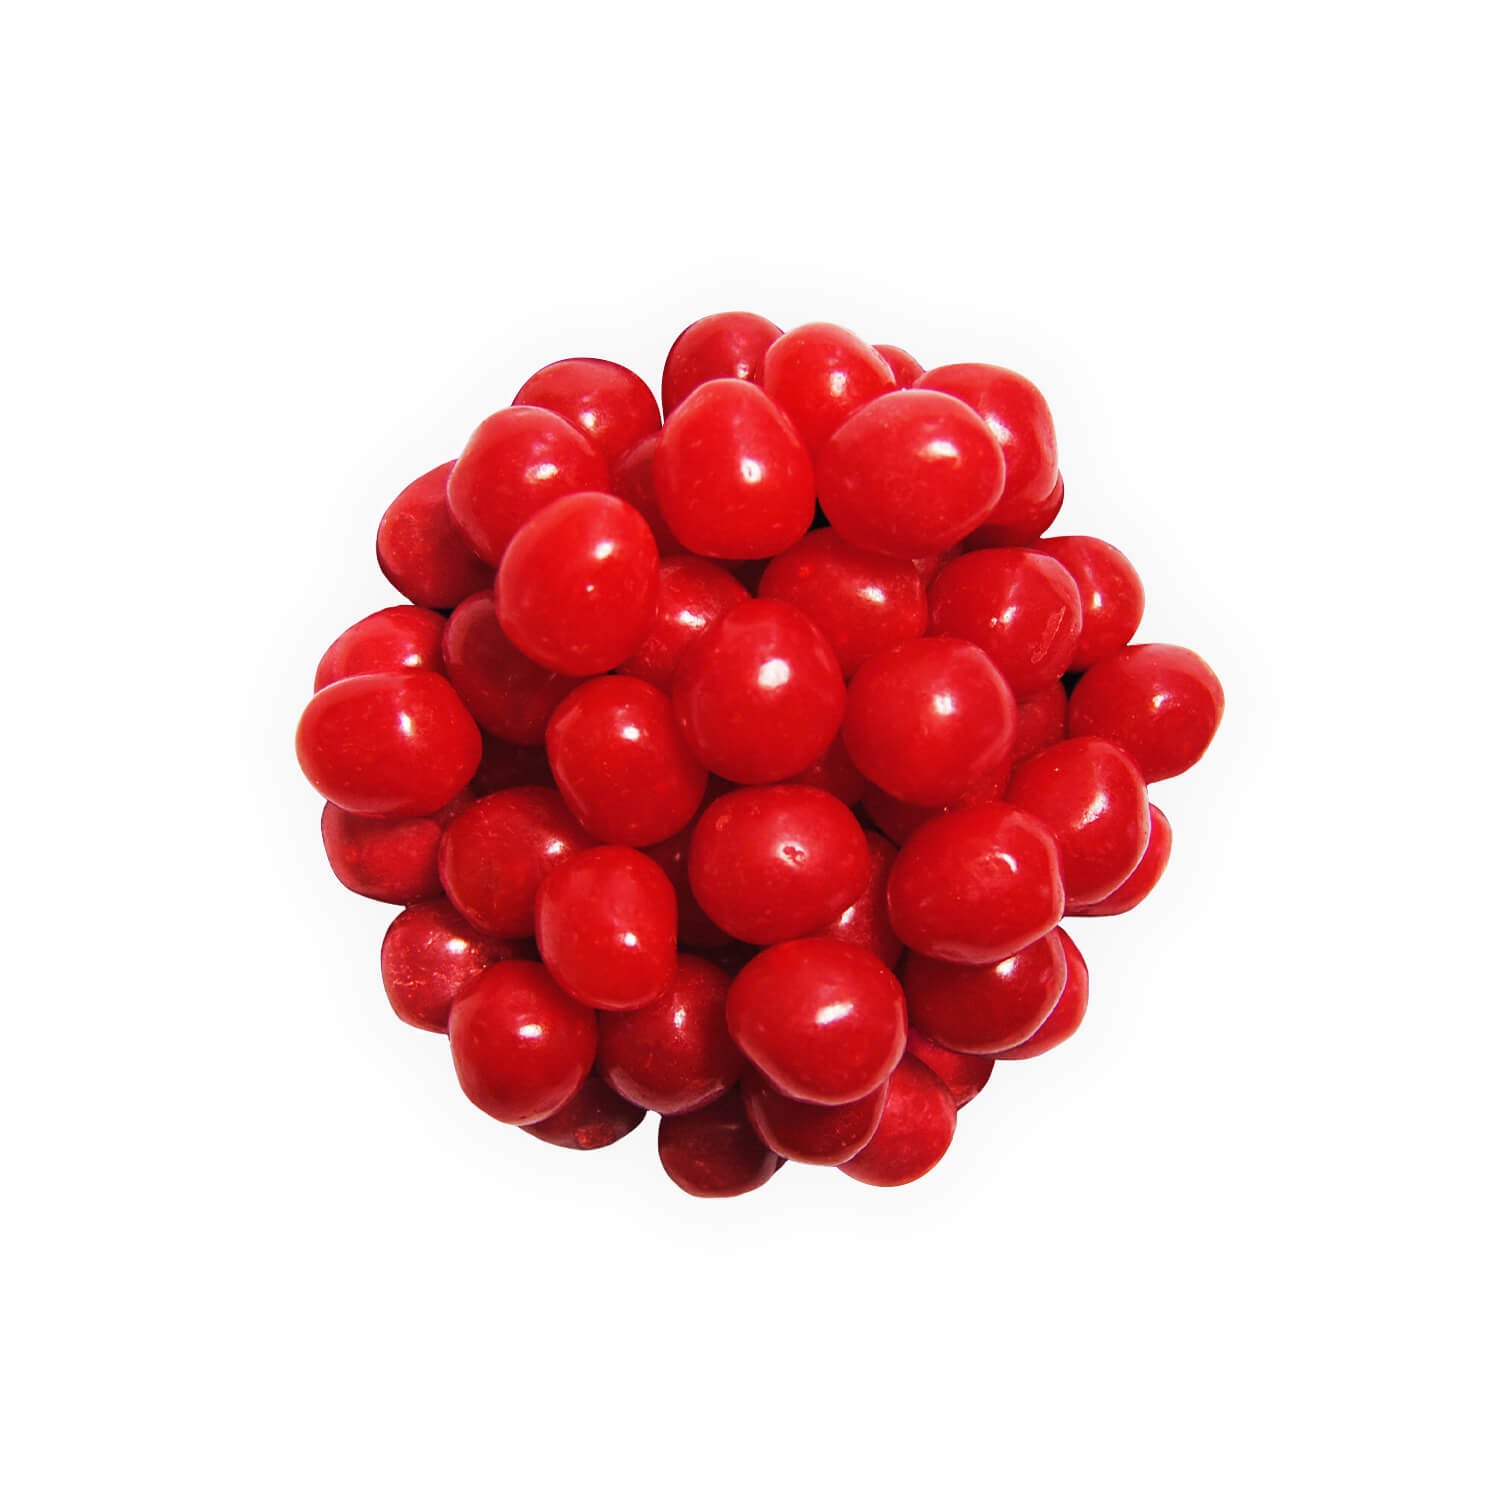 Sour cherry balls